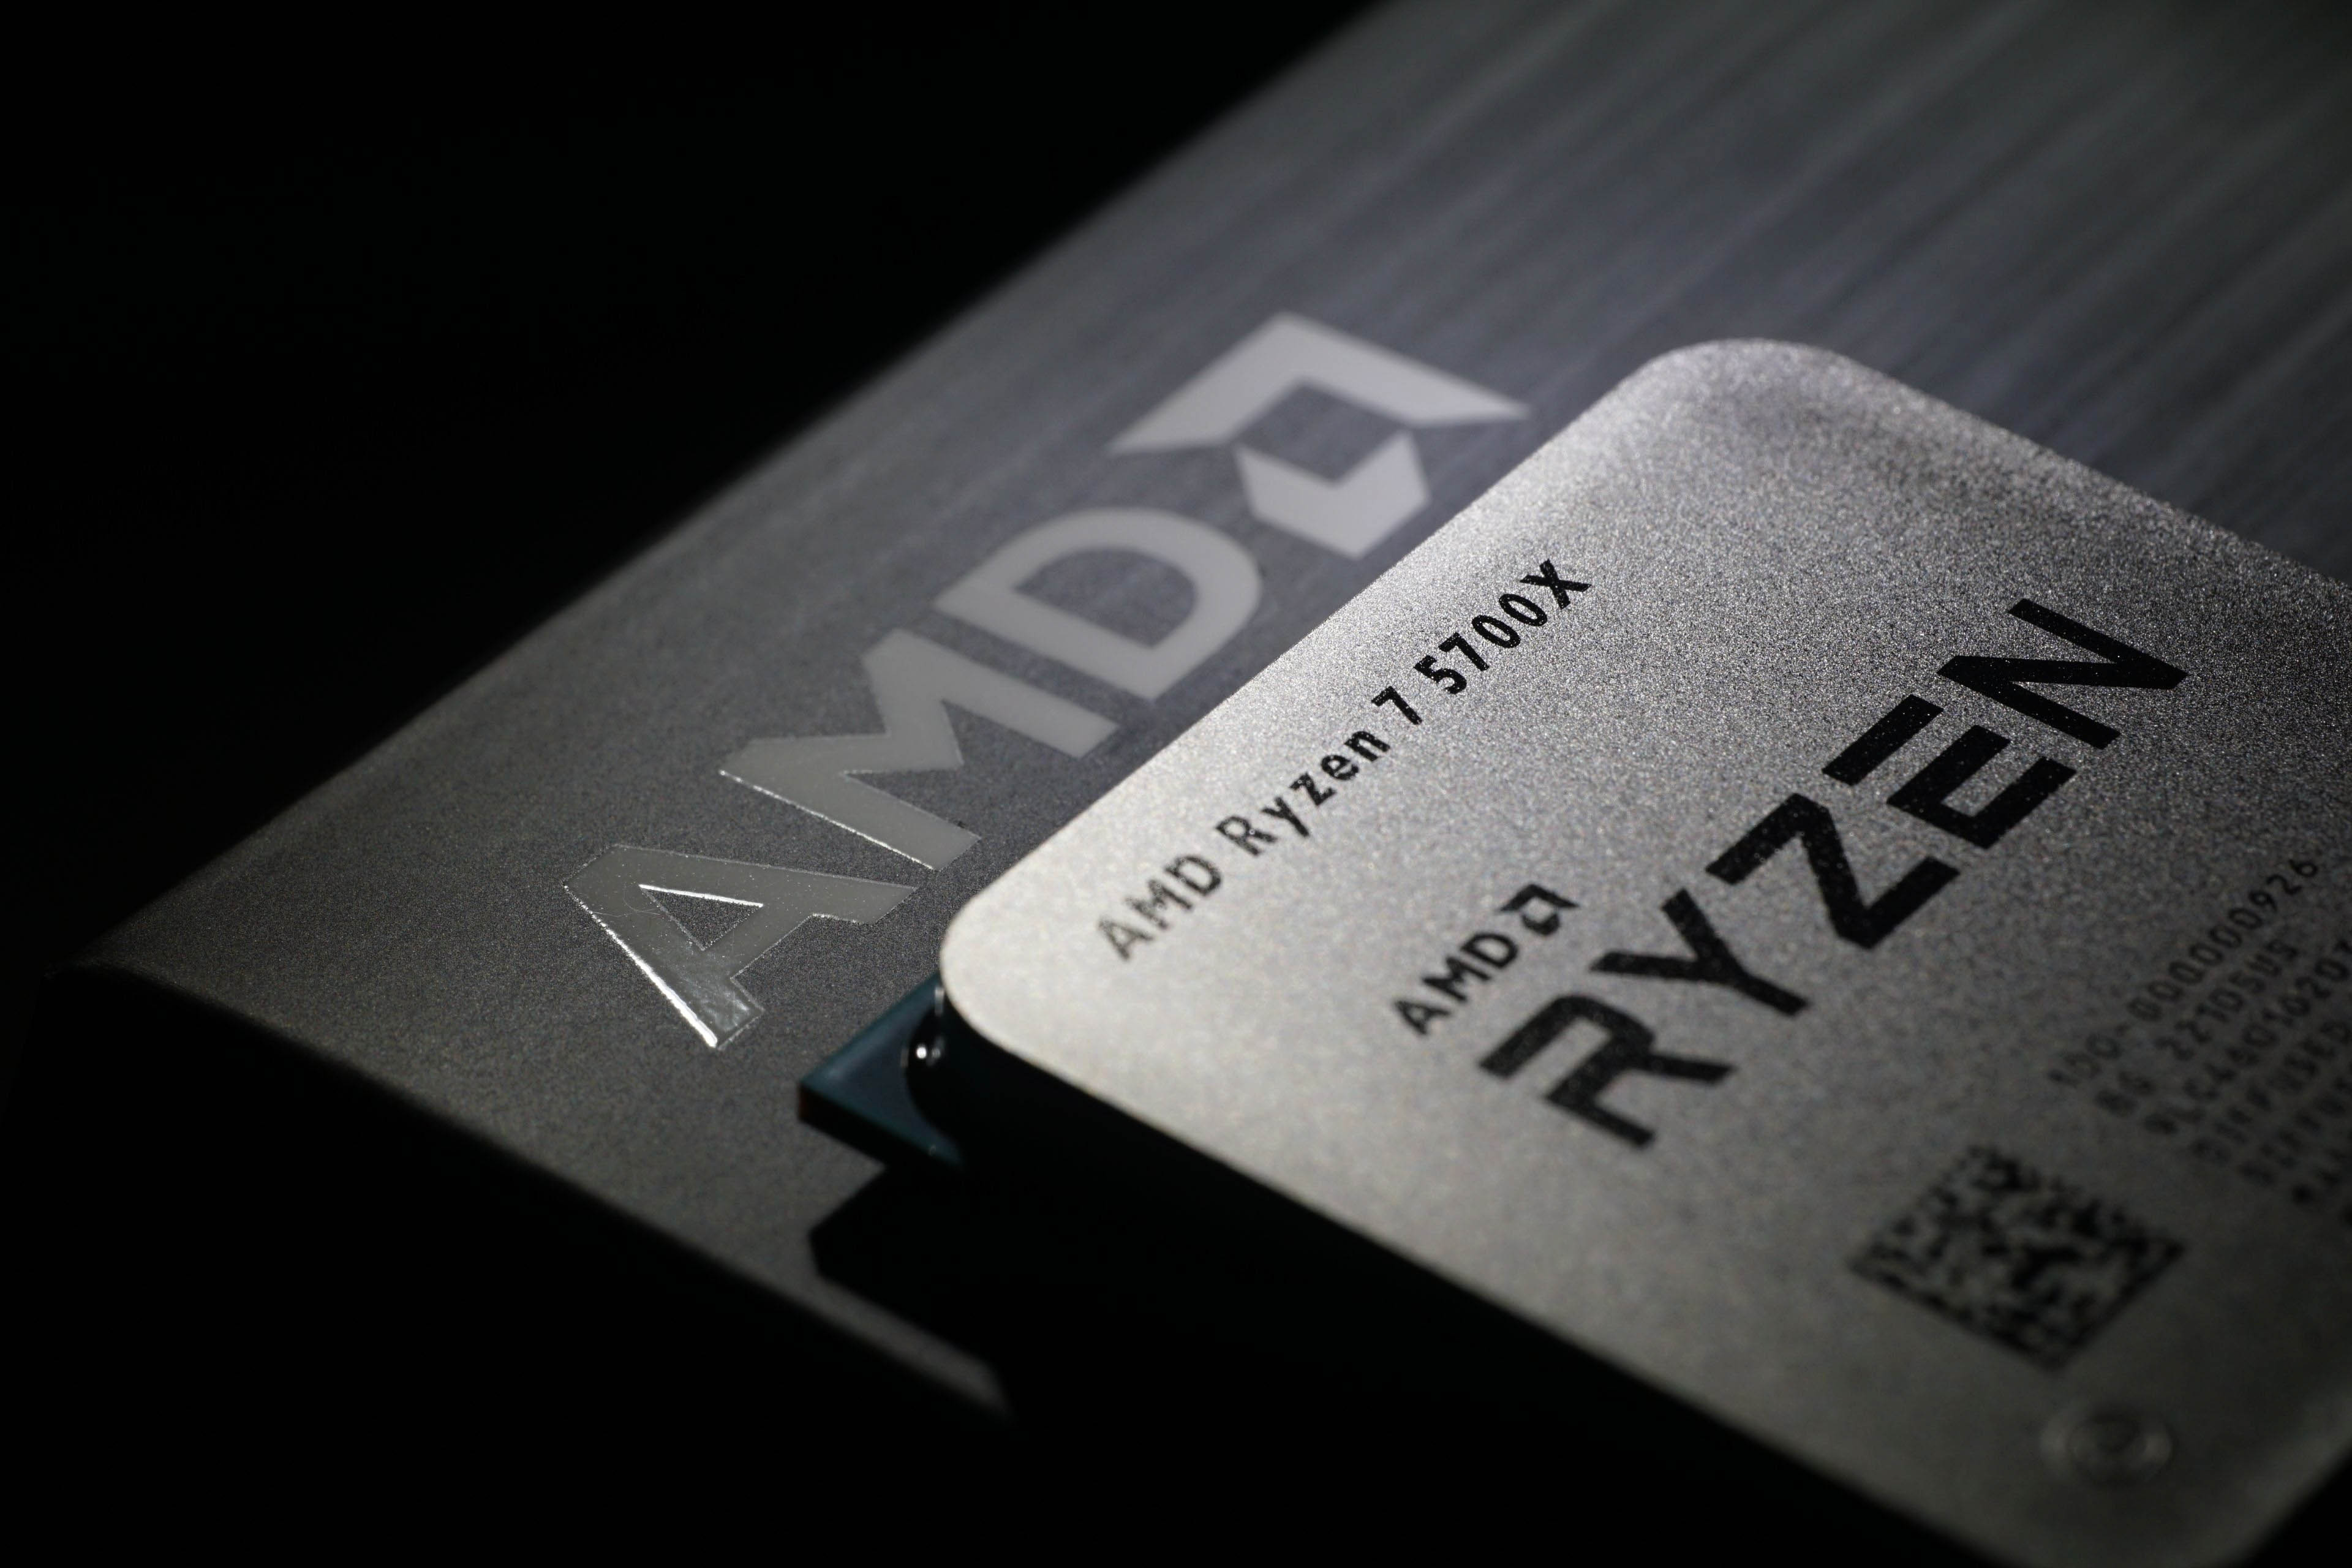 AMD Ryzen 7 5700X 3.4 GHz 8-Core AM4 Desktop CPU Processor R7 5700X